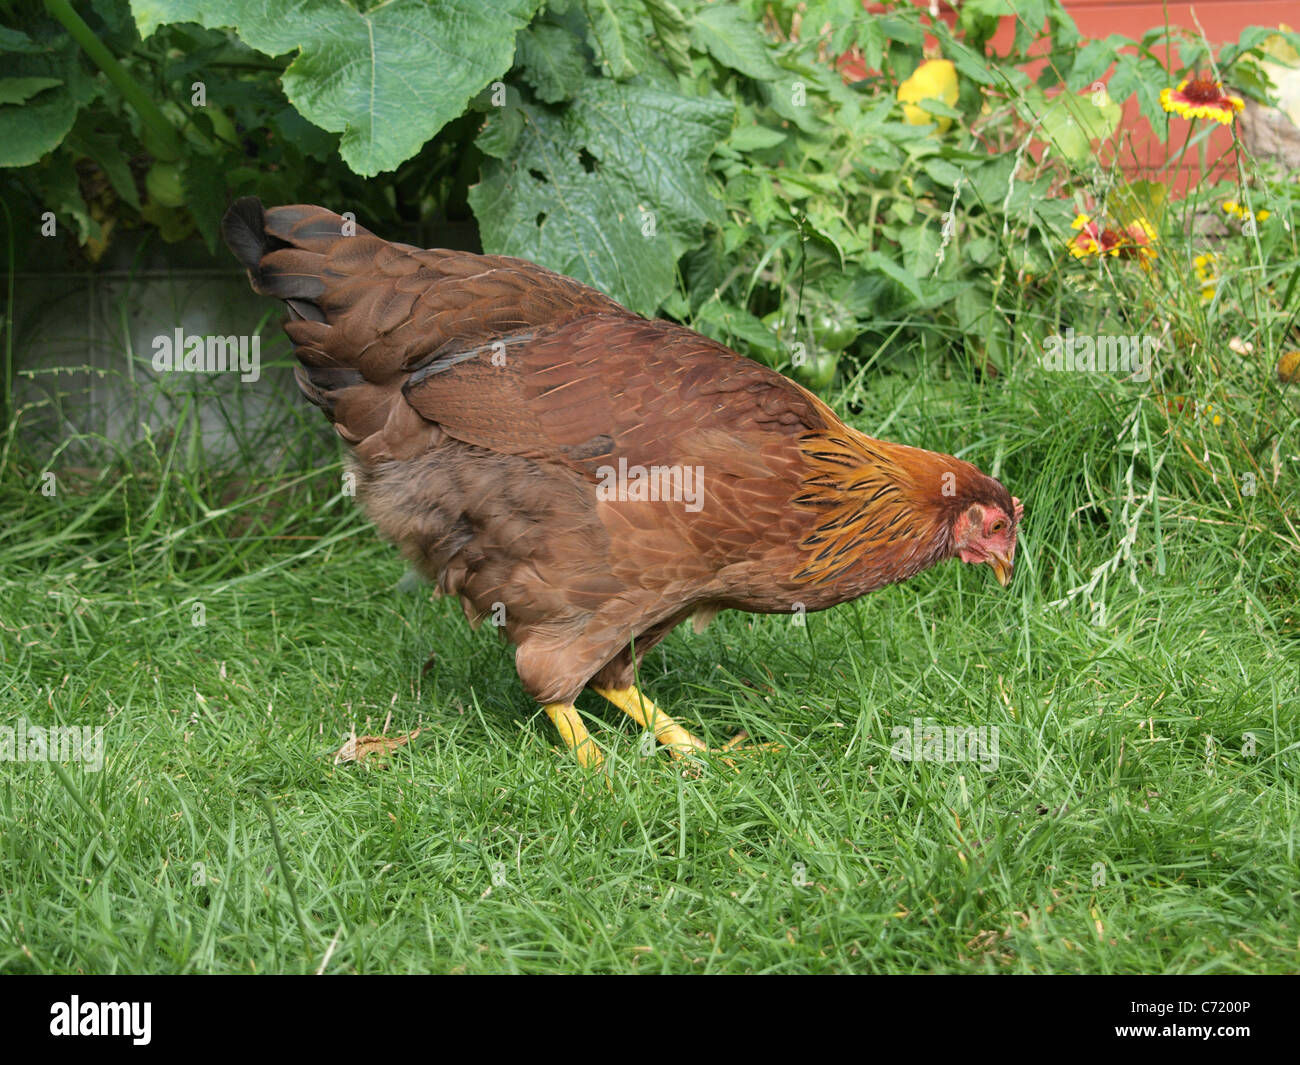 Welsummer Chicken on grass in back garden. UK Stock Photo